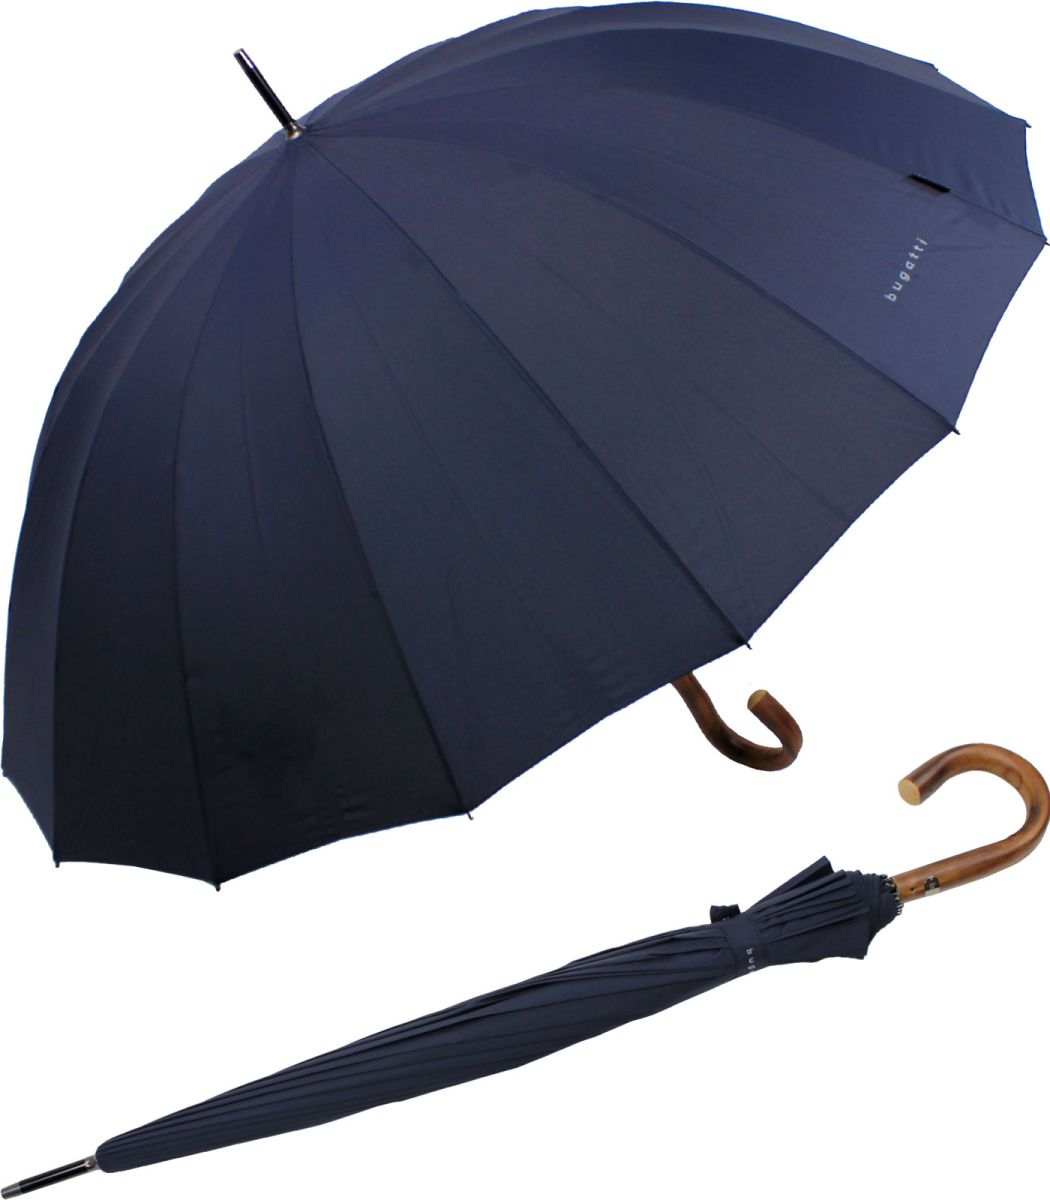 Regenschirm Bugatti Doorman navy blau, 94,99 €